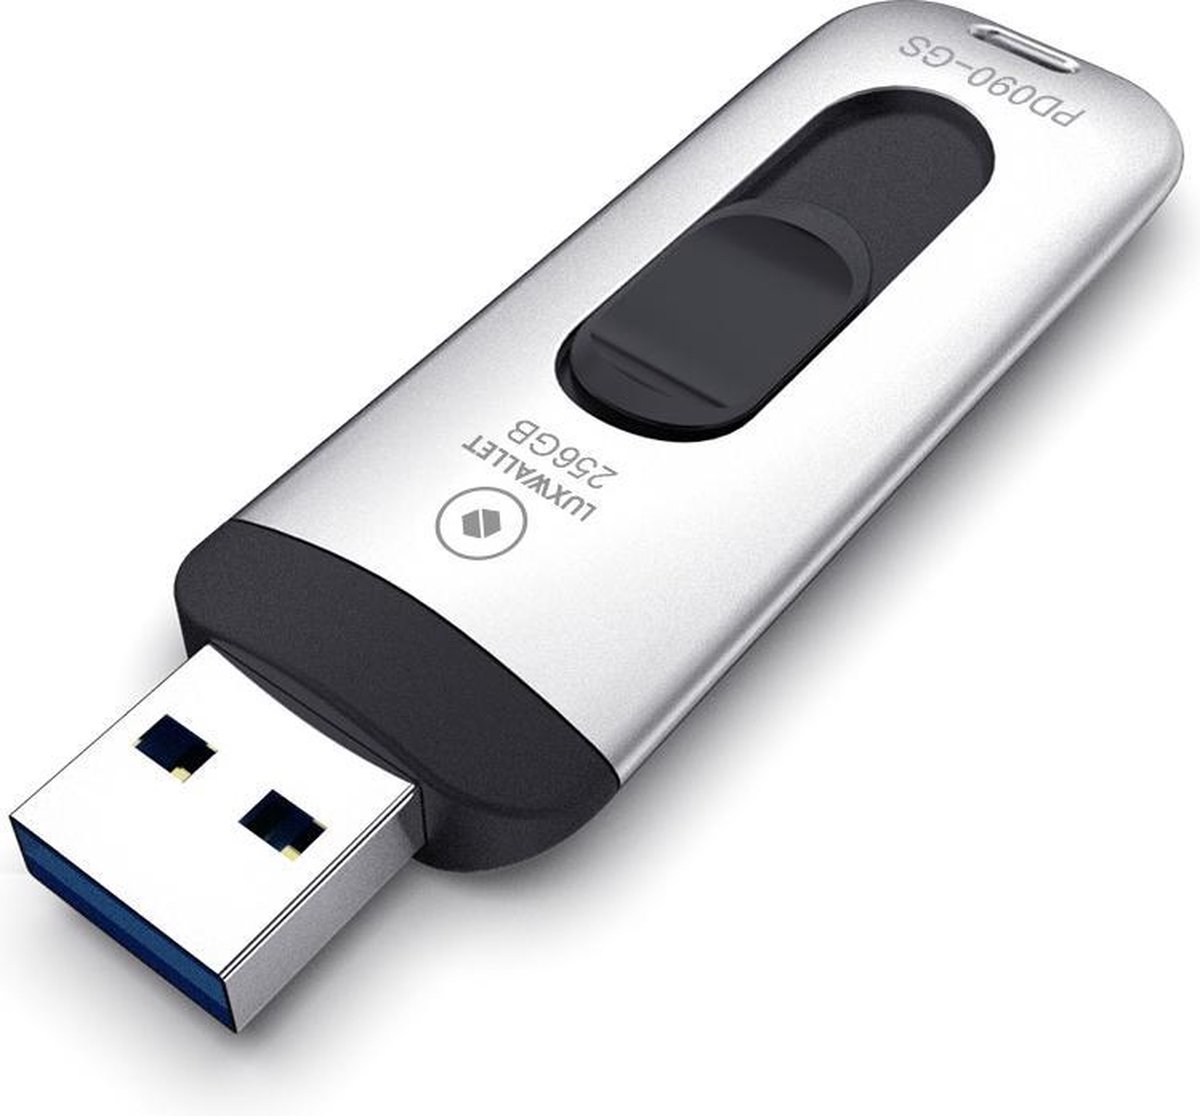 LUXWALLET PD9 USB 3.0 Flash Drive – Metalen USB Stick - 256GB High Speed ​​Draagbare Geheugen Stick - Leessnelheid tot 150 MB / s –Zilver/Zwart